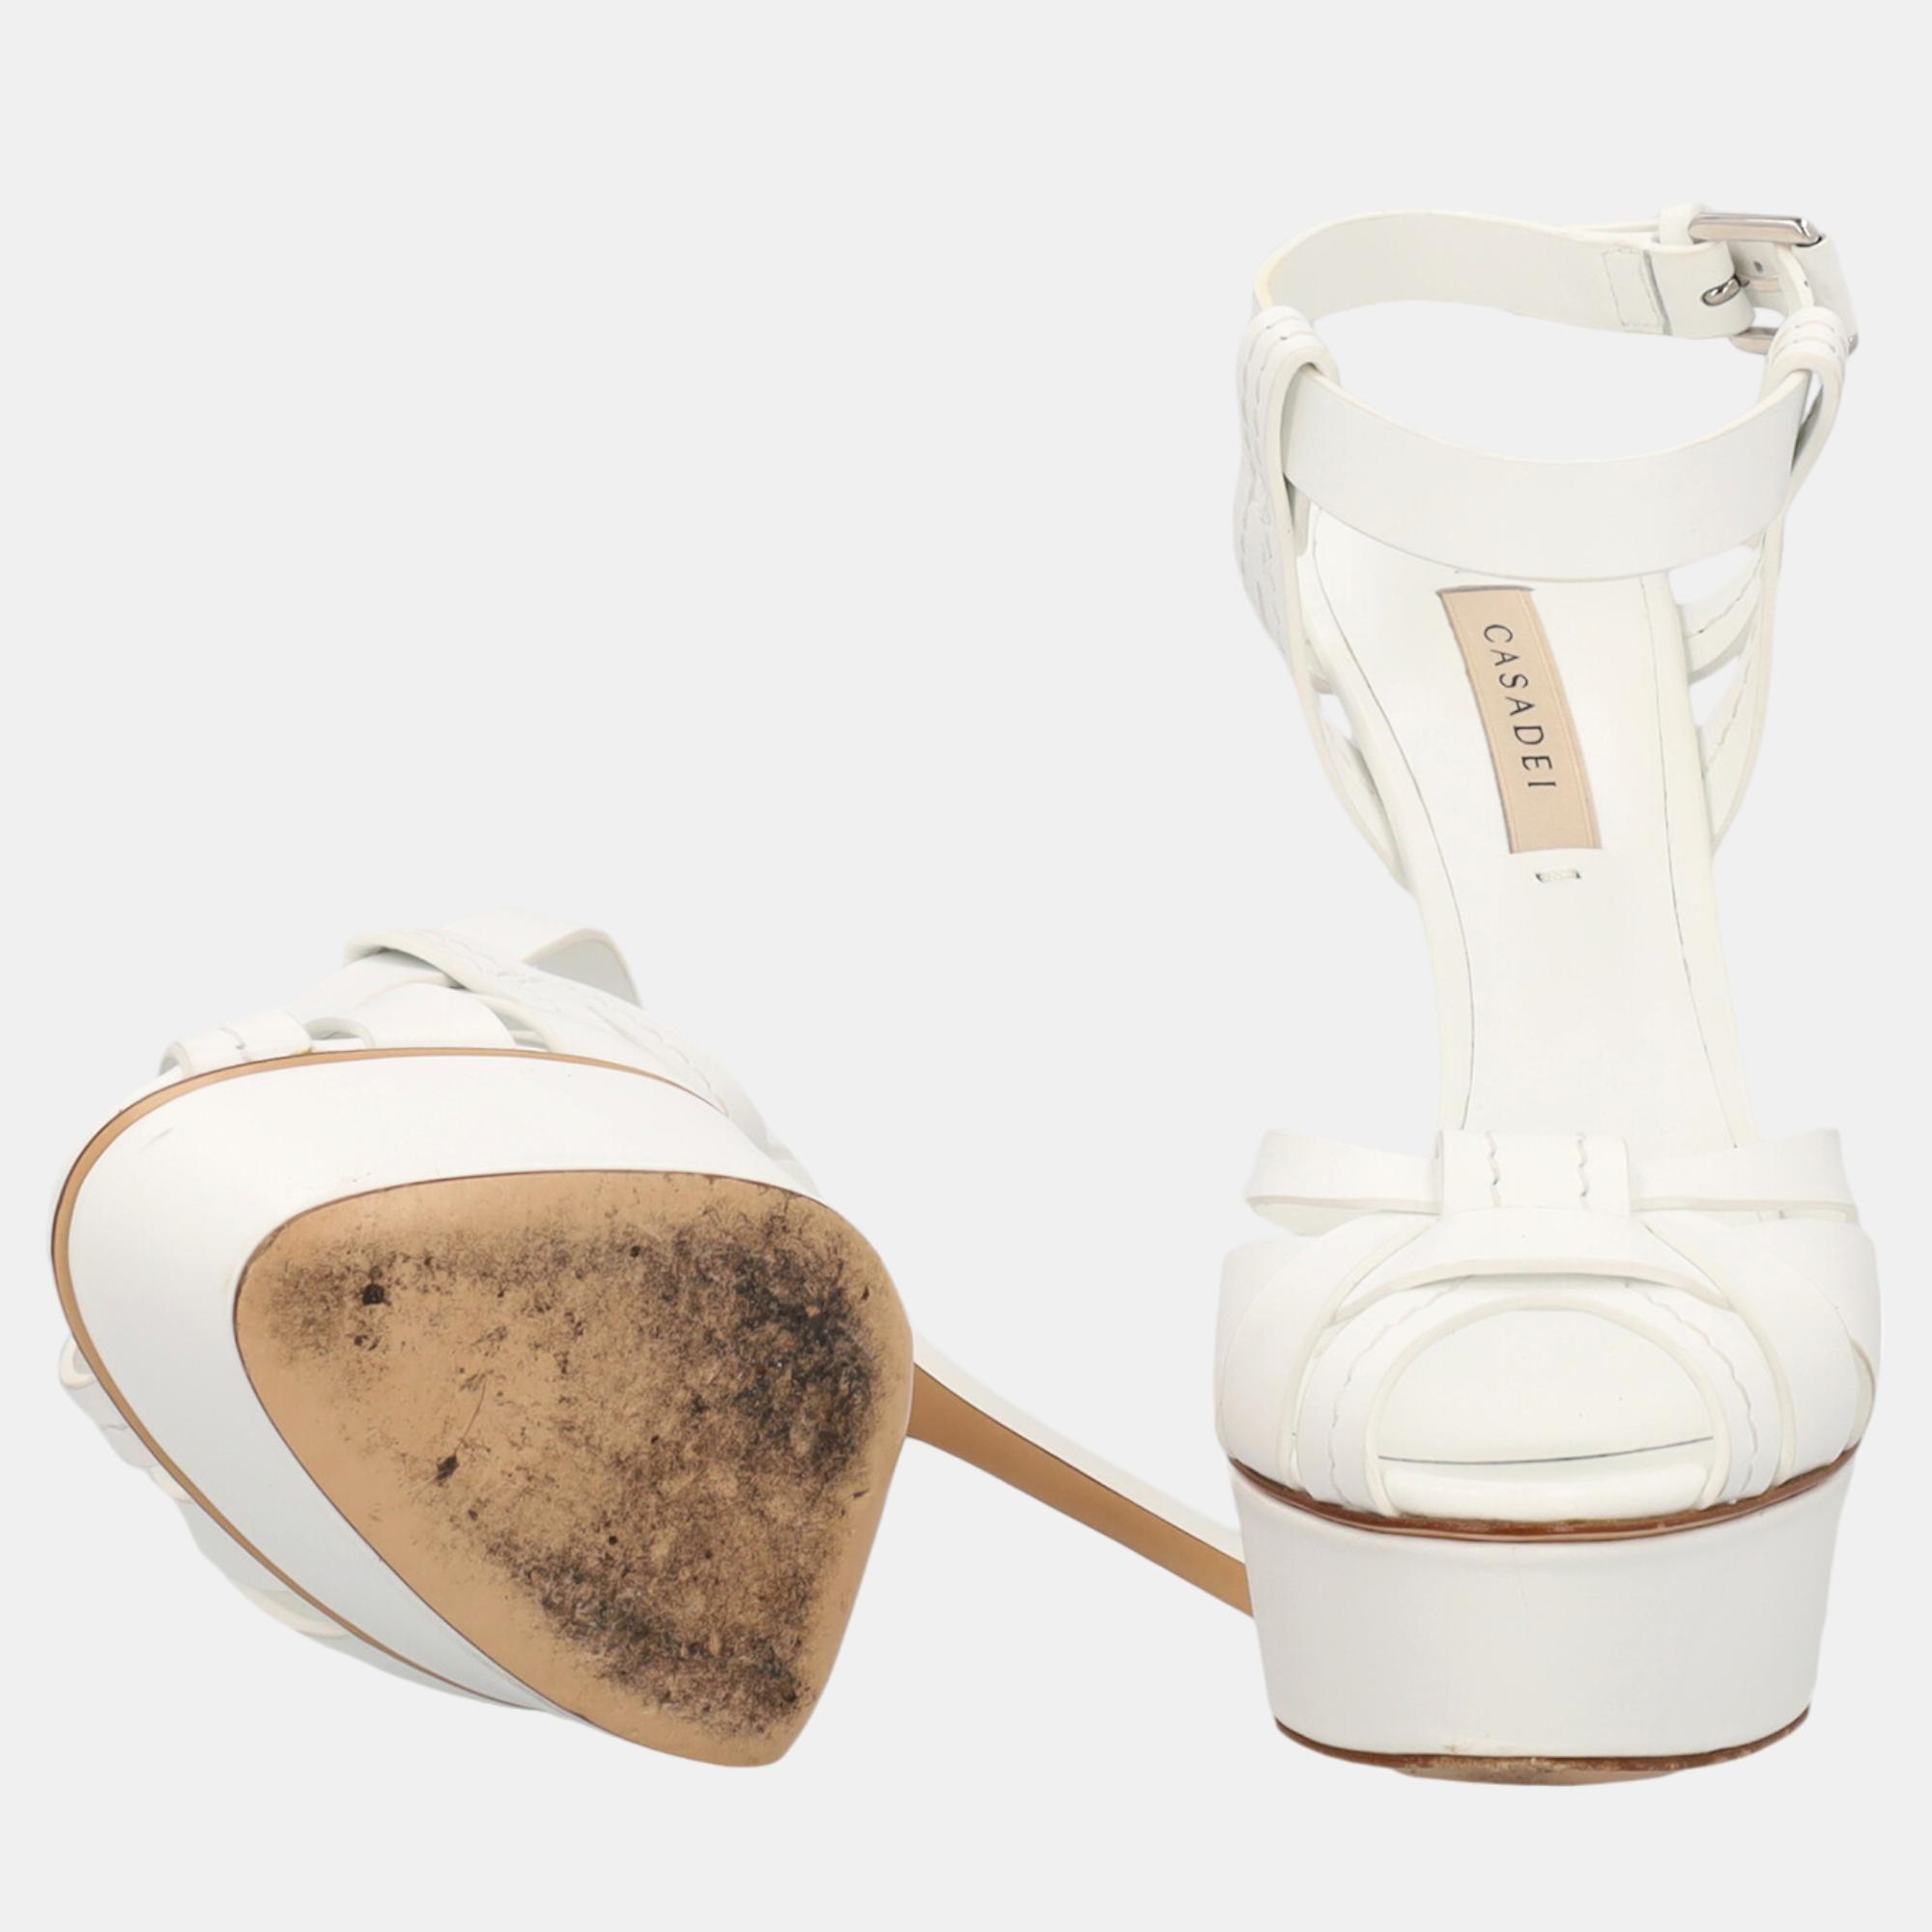 Casadei  Women's Leather Sandals - White - EU 36.5